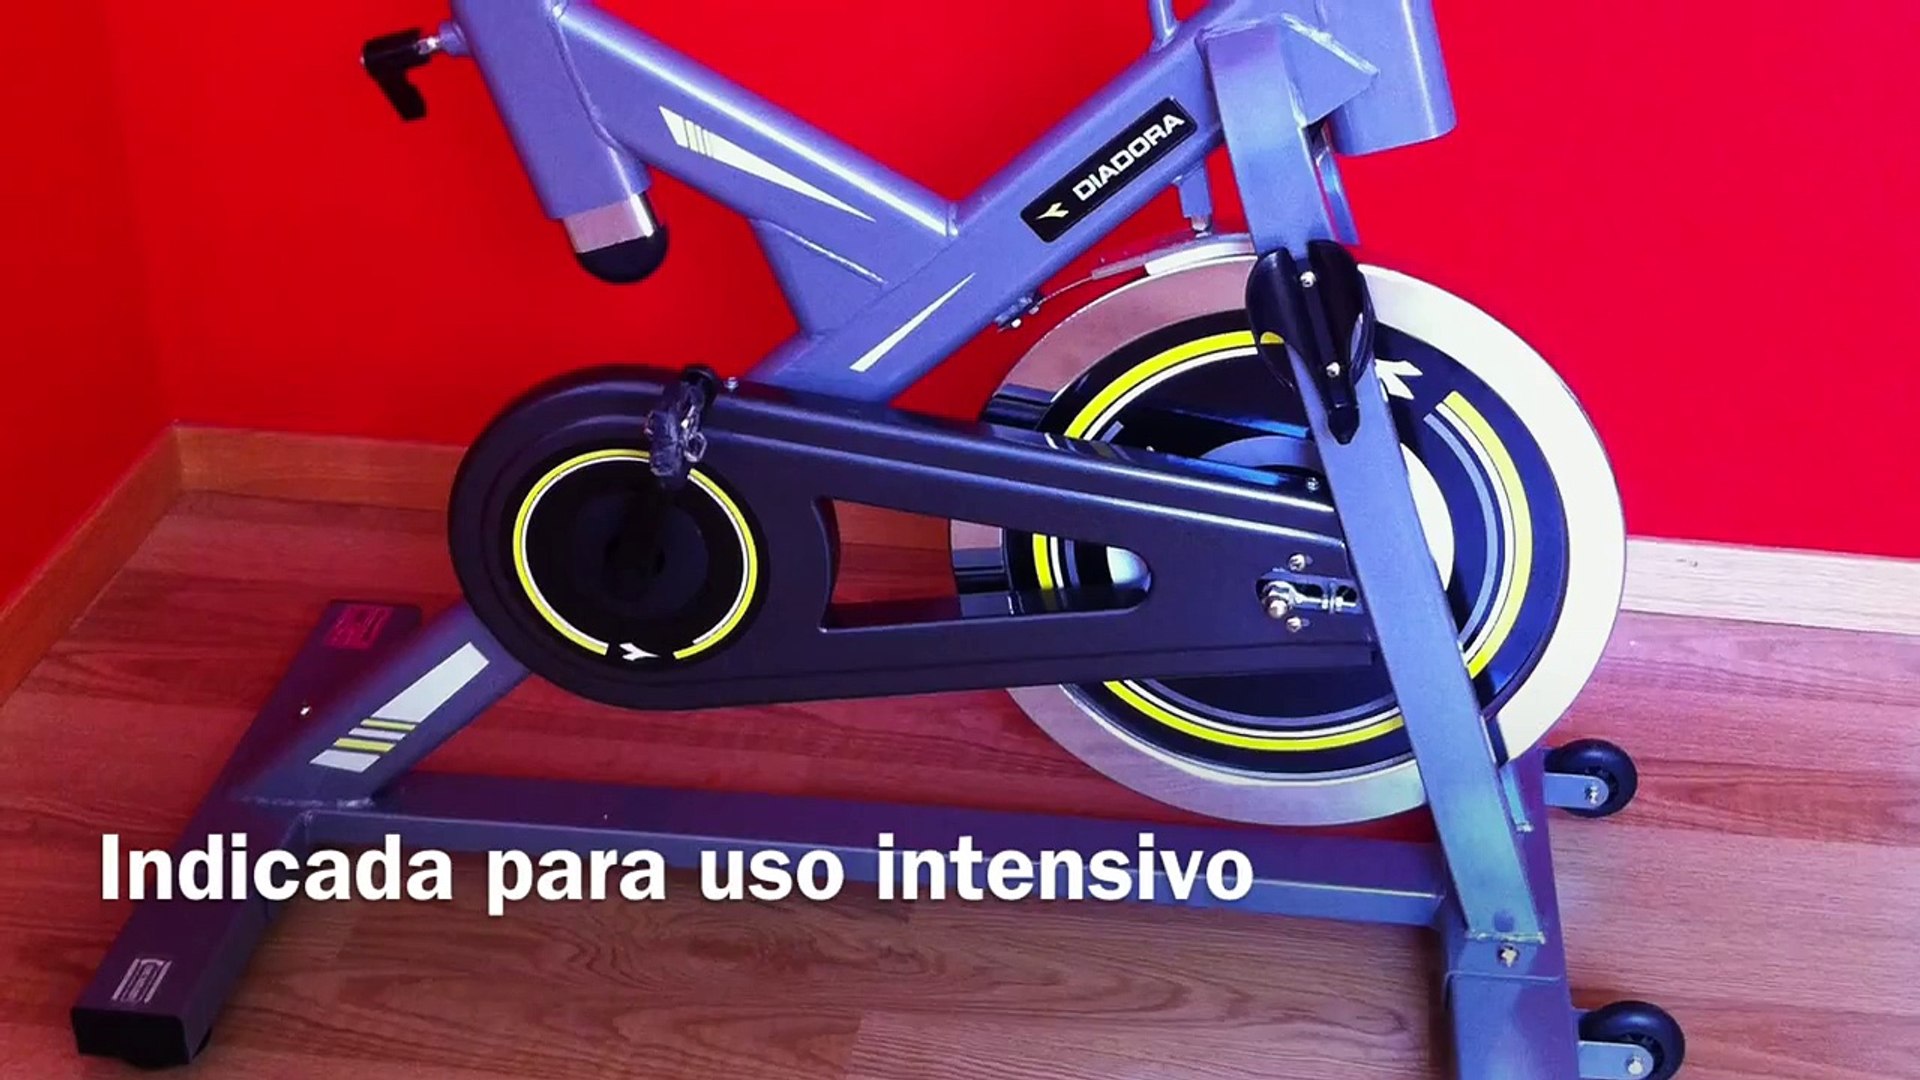 Bicicleta spinning Diadora Racer 22 - video Dailymotion